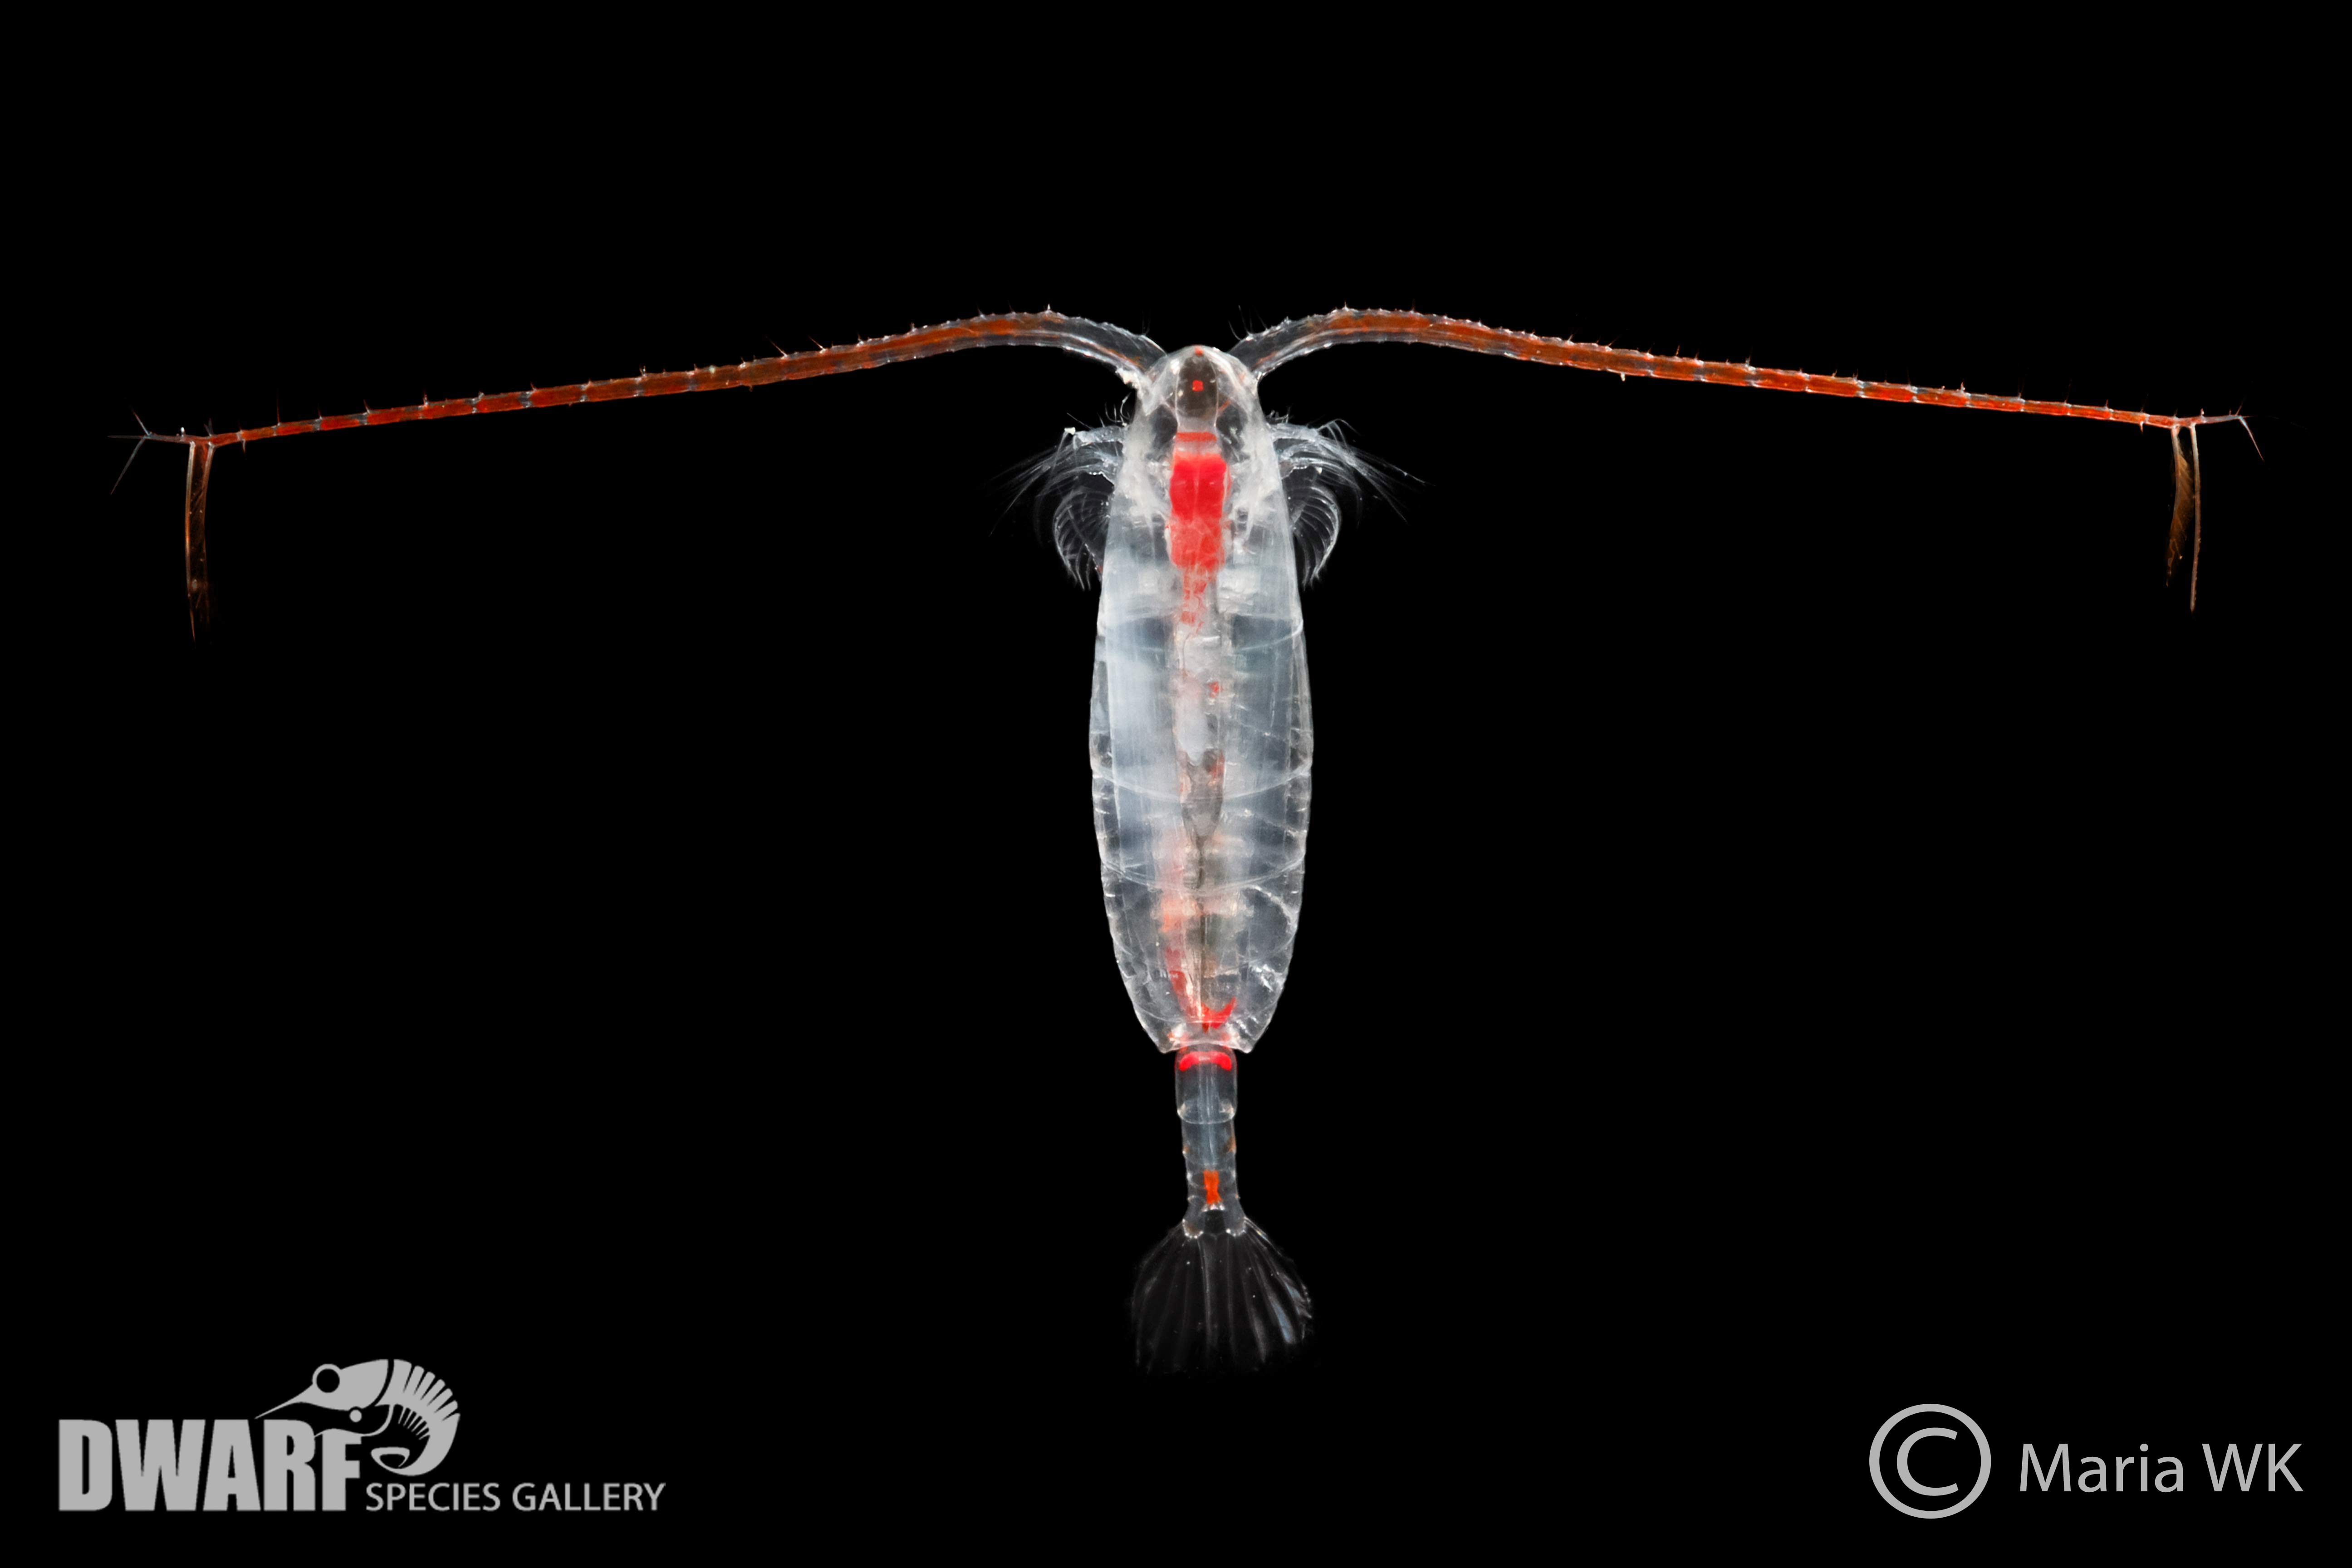 Zooplankton, crustacea, Calanus hyperboreus